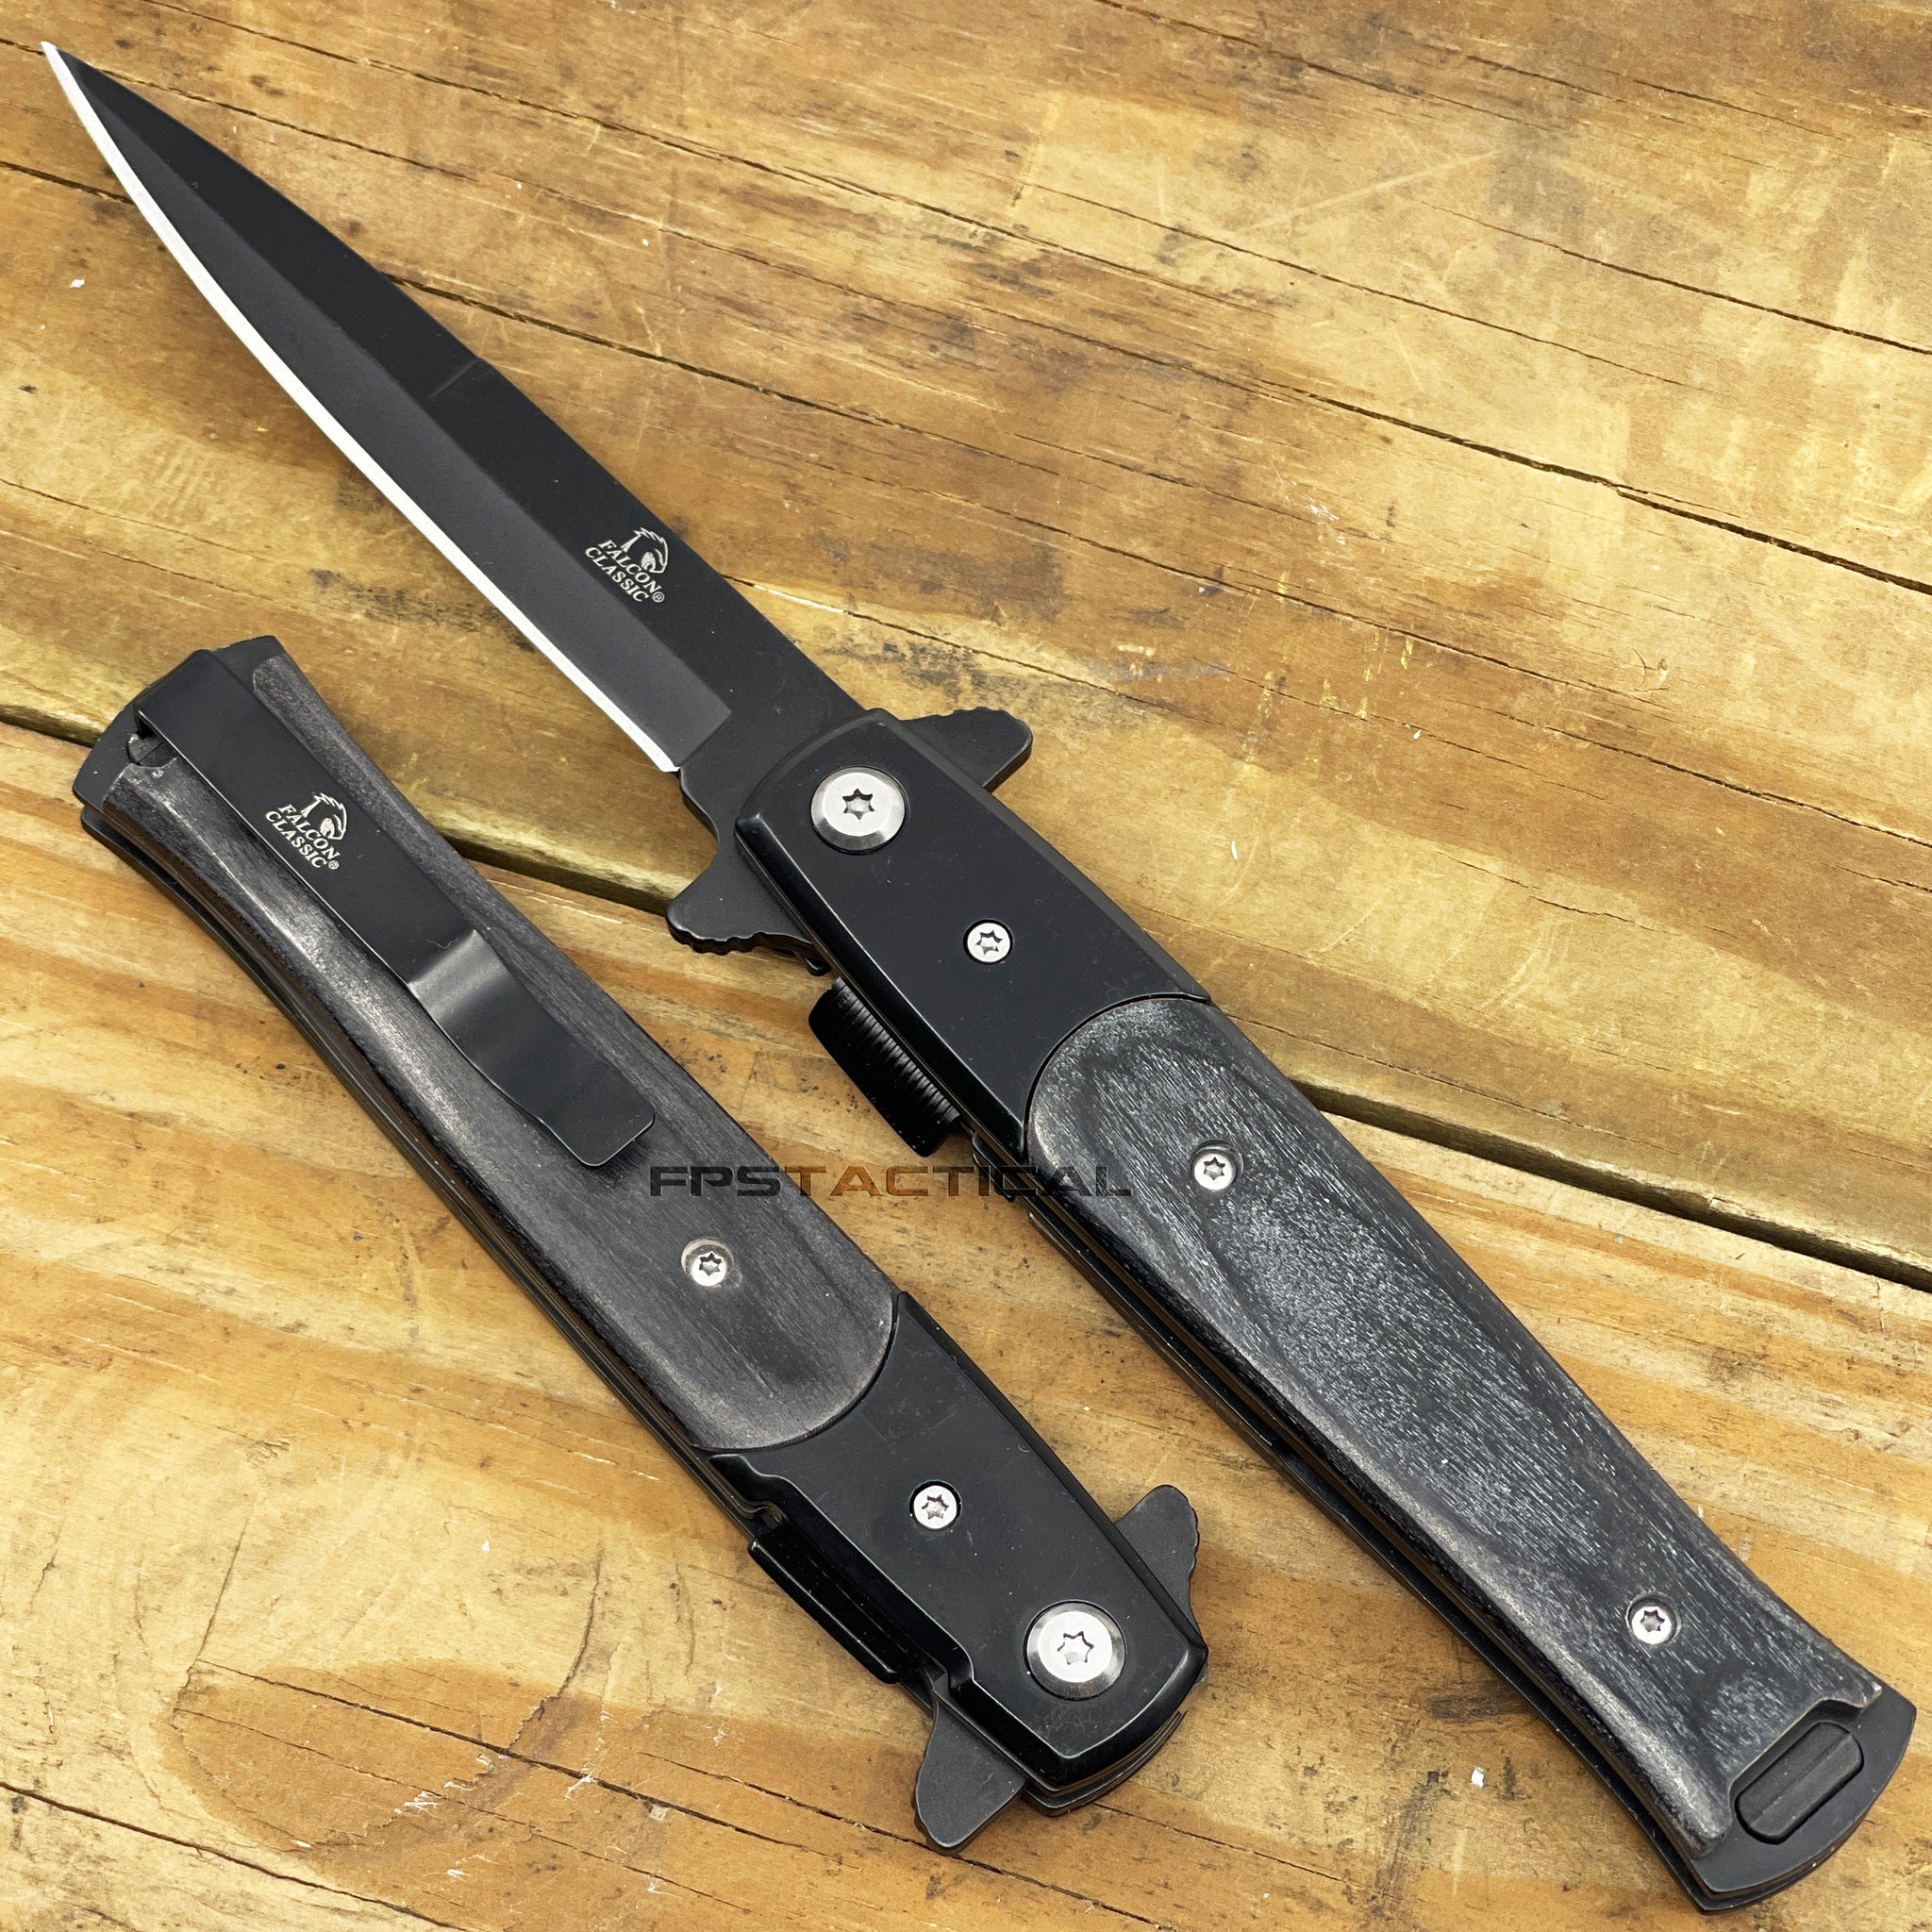 Falcon Classic KS1107BK Spring Assisted Stiletto Pocket Knife Black wi